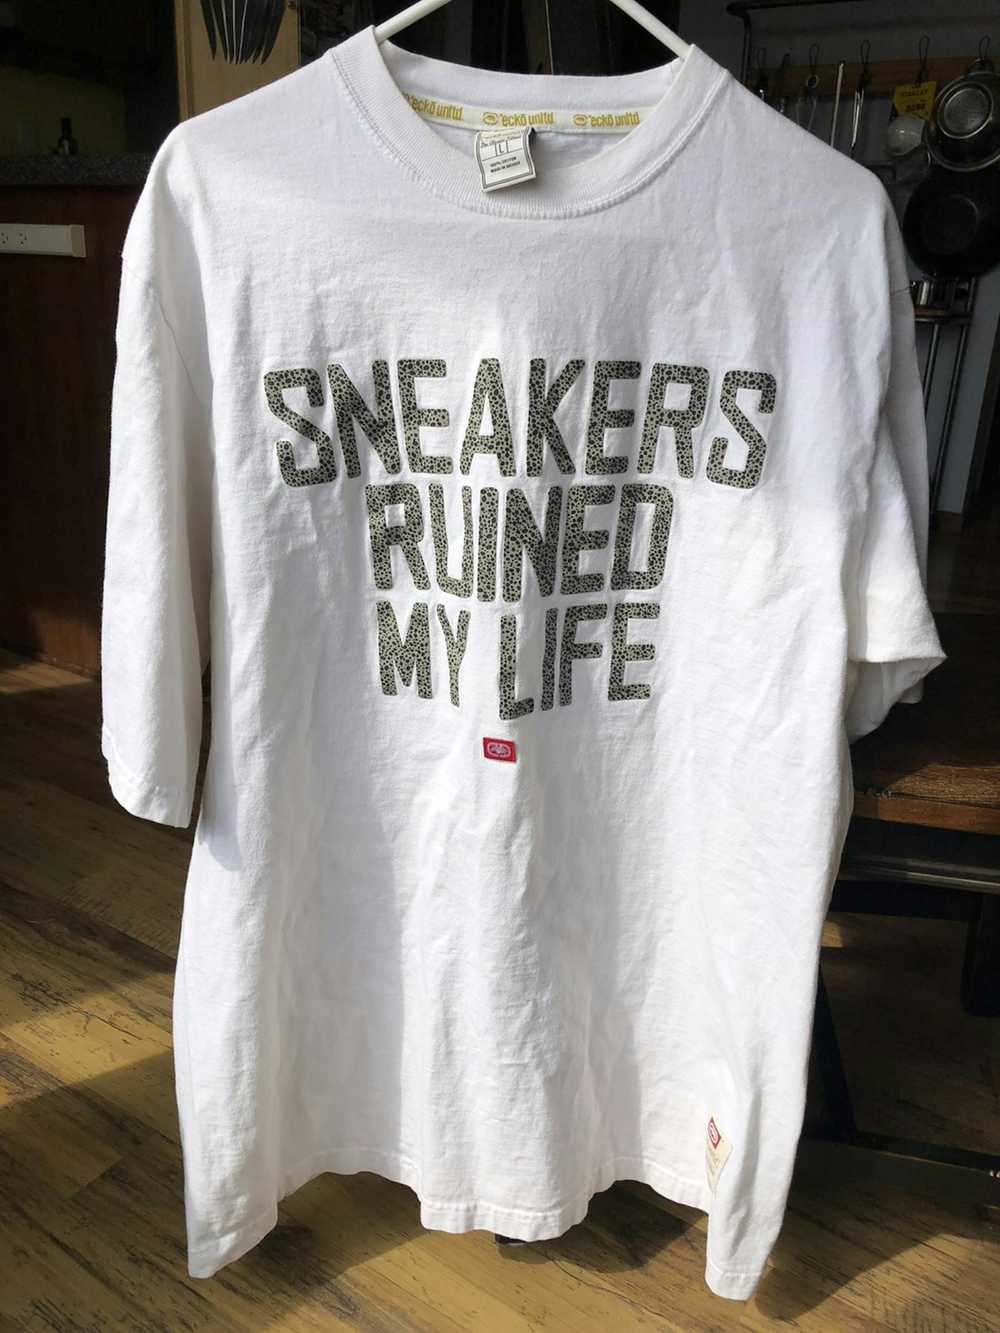 Ecko Unltd. Sneakers ruined my life shirt. White … - image 1